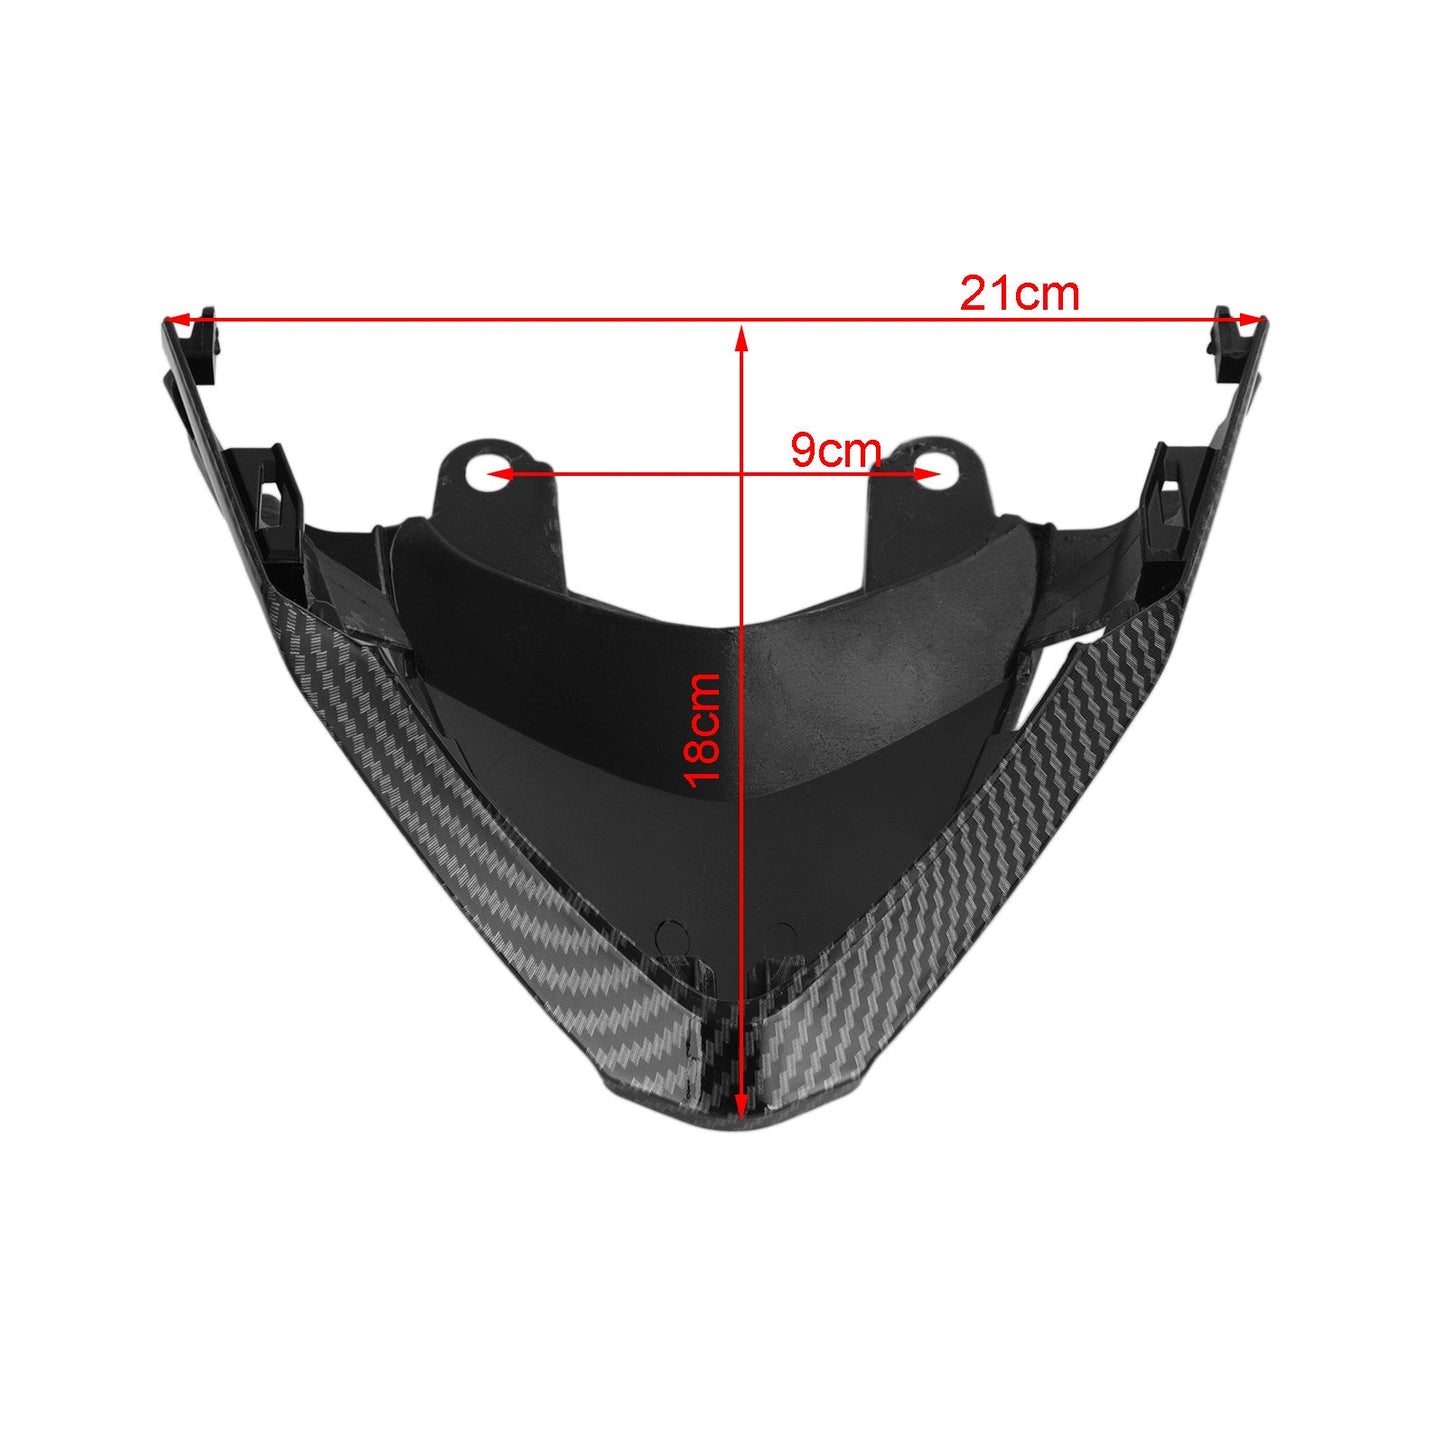 Rear Seat Tail Light Cover Fairing Cowl for Honda CBR500R 2019-2021 Carbon